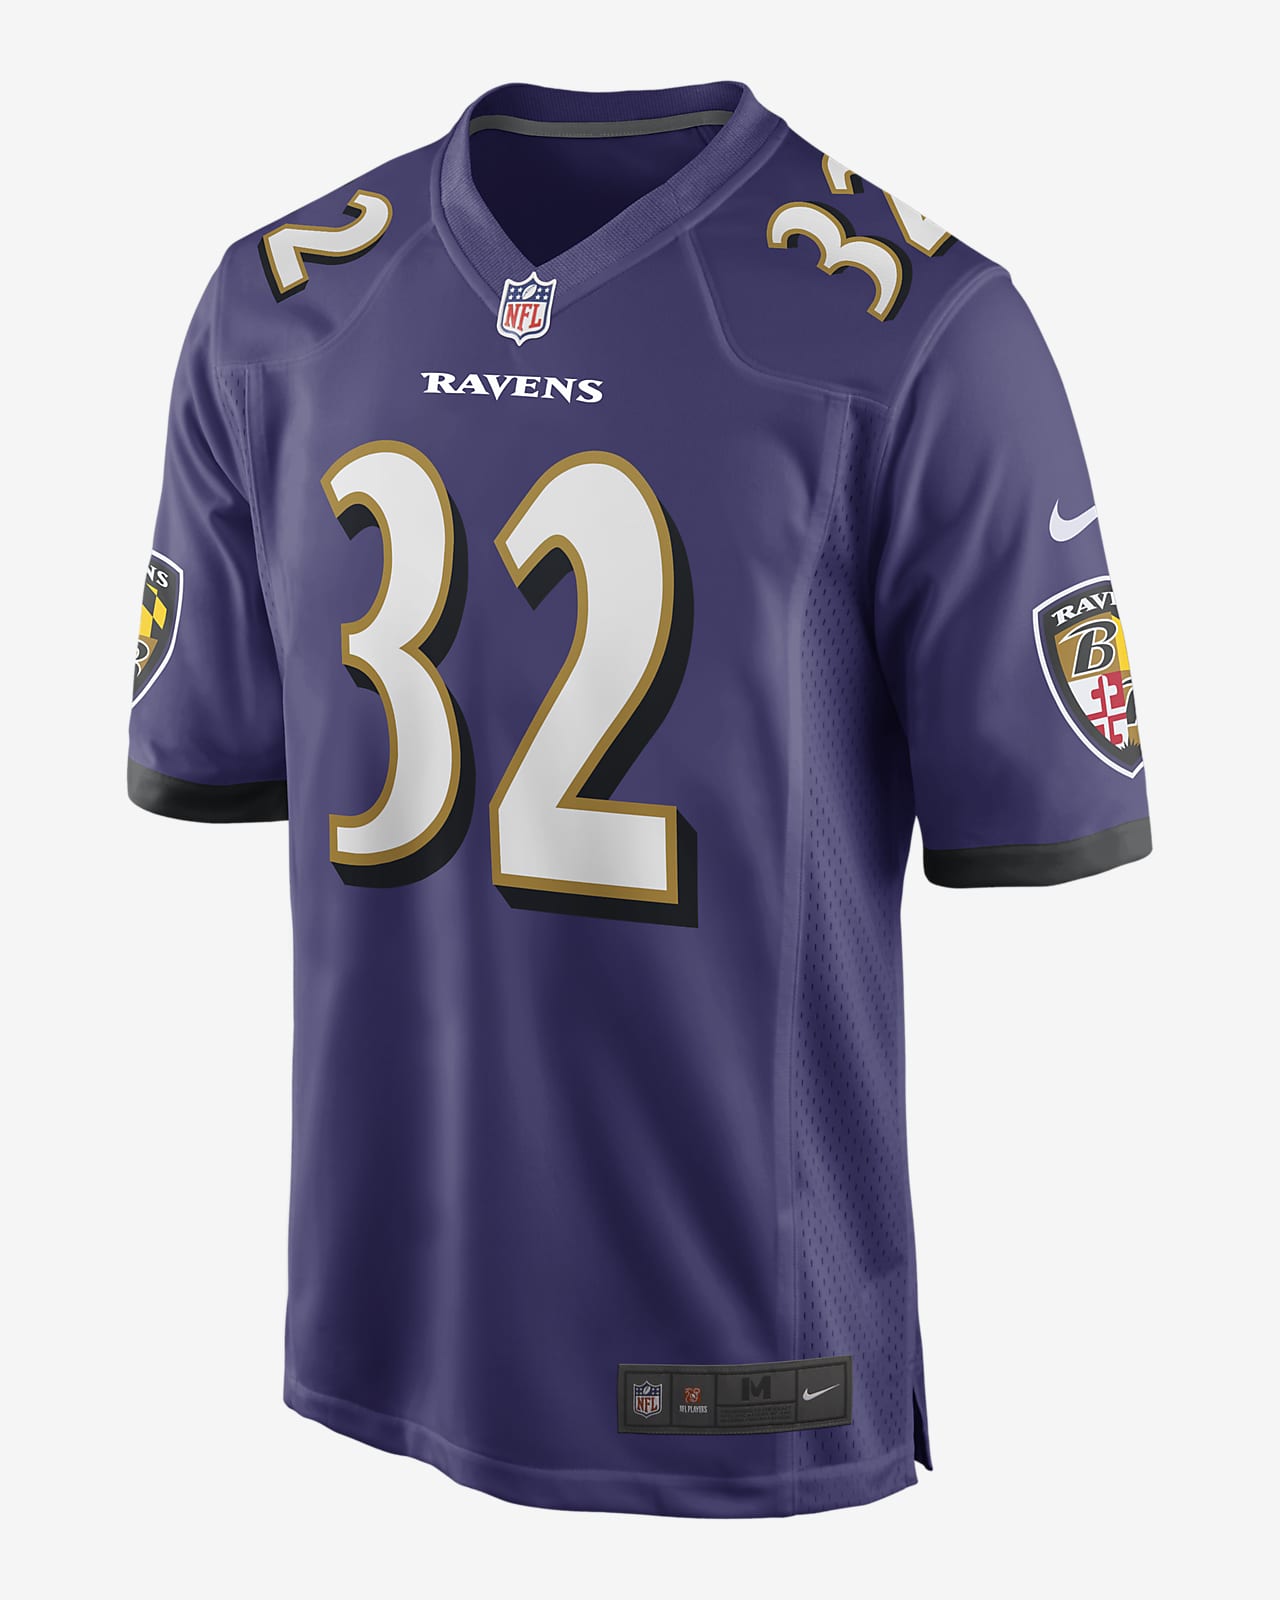 Jersey de fútbol americano Game para hombre NFL Baltimore Ravens (Marcus Williams)